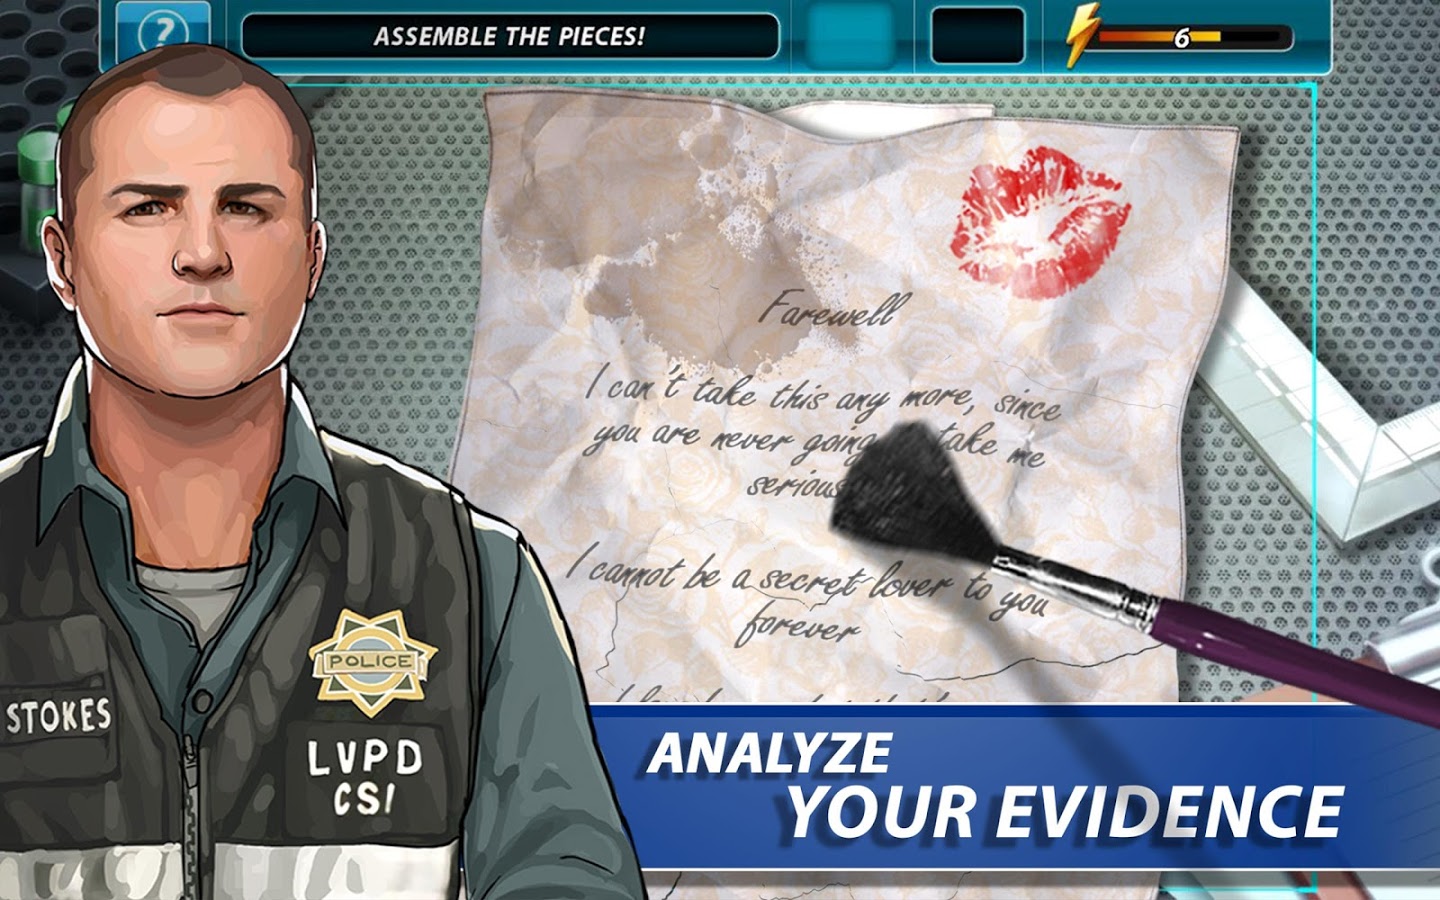 CSI Hidden Crimes v2.37.7 Mod Apk Unlimited Money/Energy Full Version